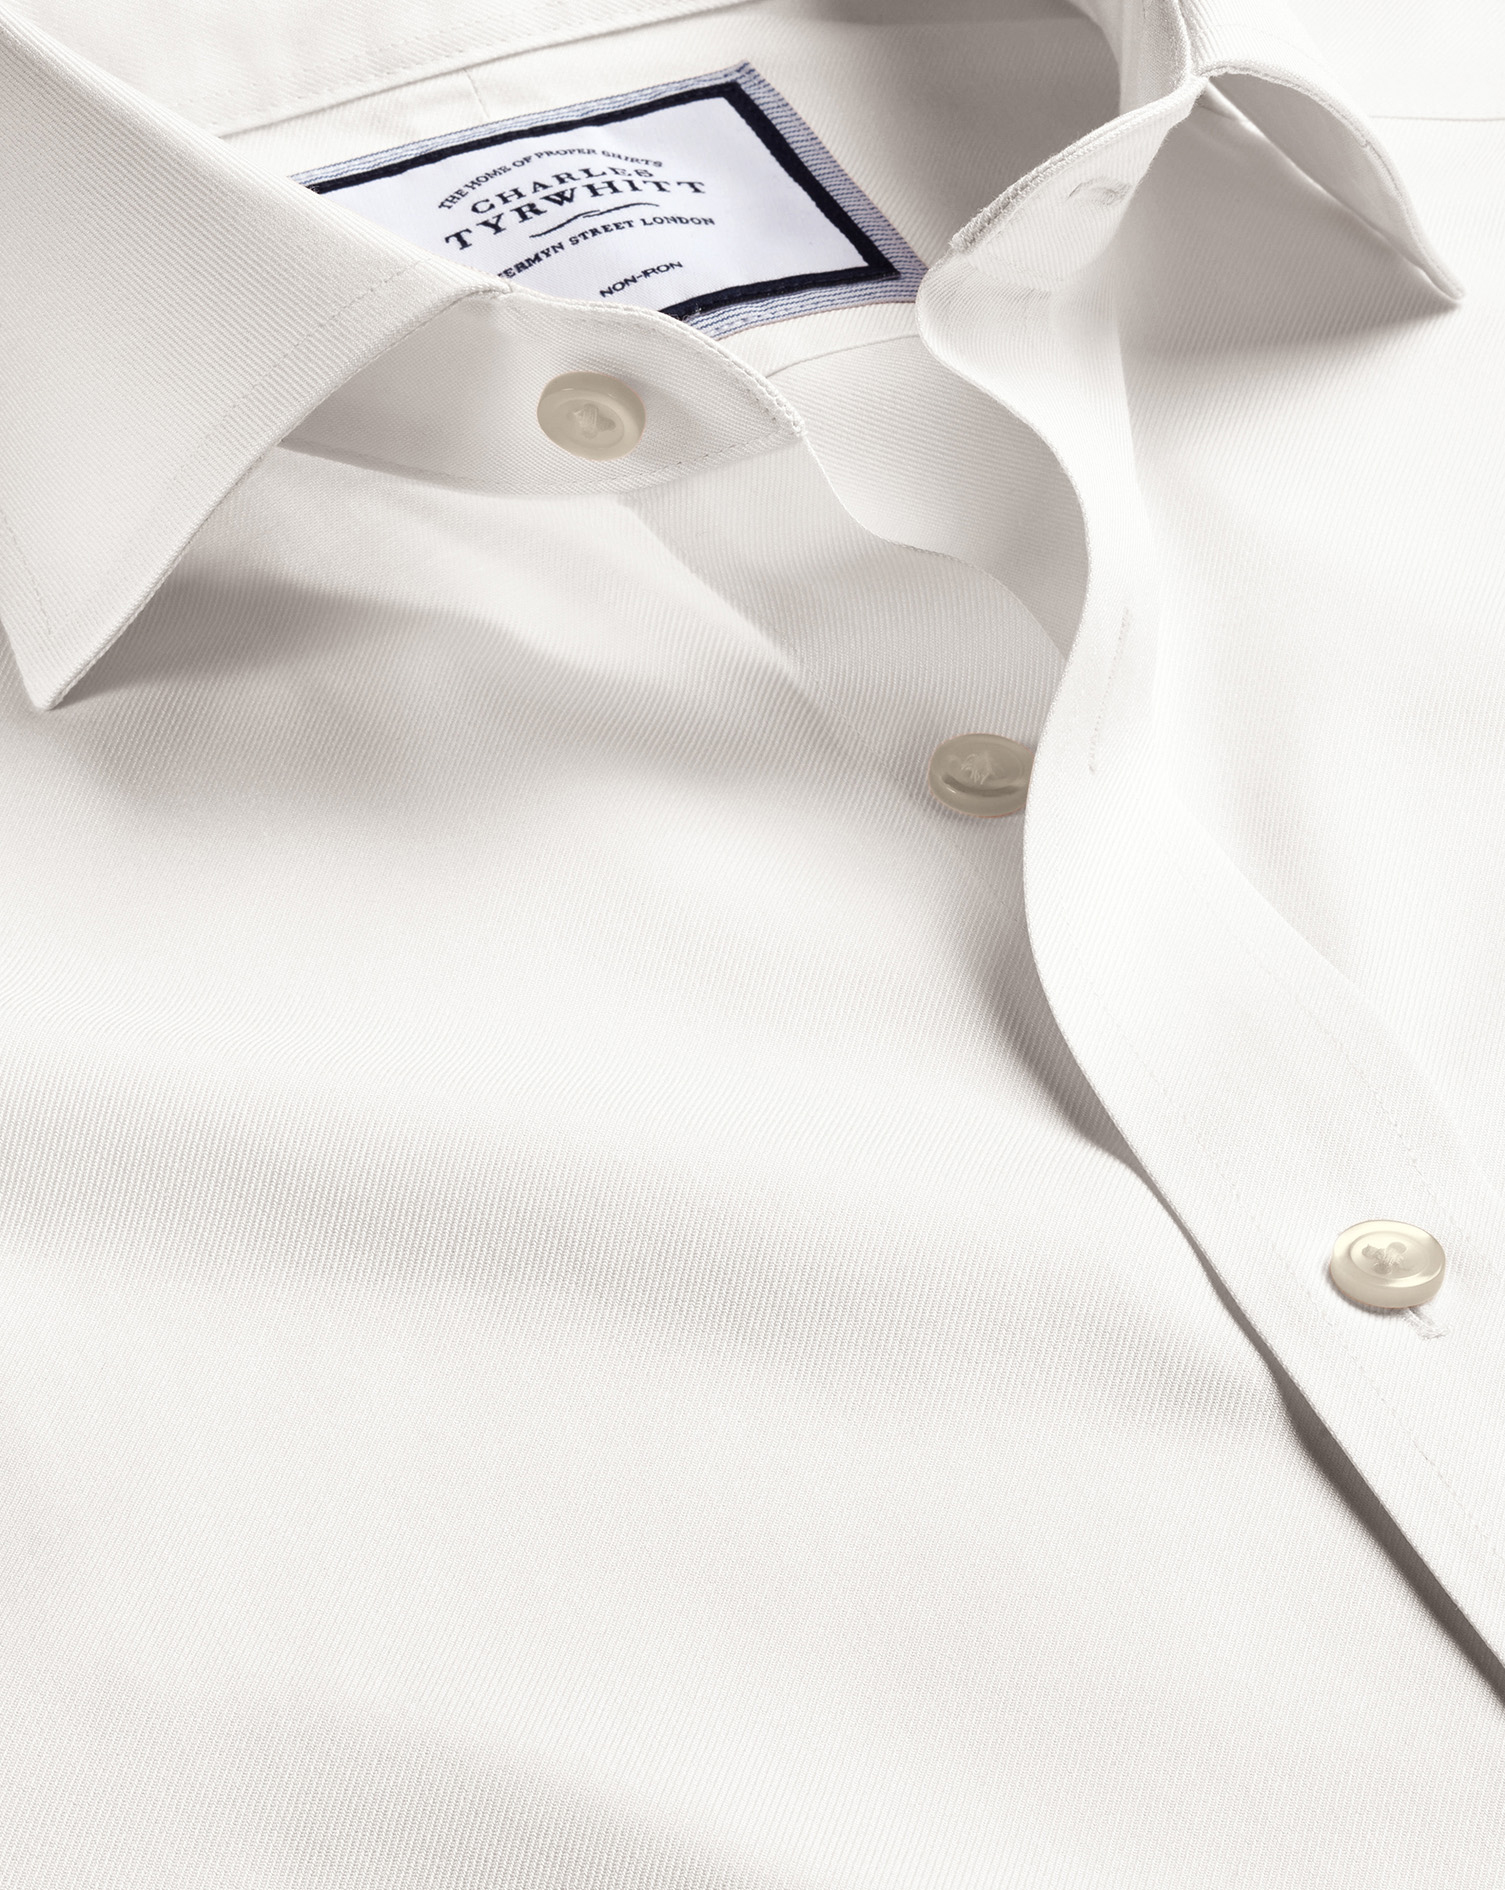 Men's Charles Tyrwhitt Cutaway Collar Non-Iron Twill Dress Shirt - Ivory White Single Cuff Size XL C